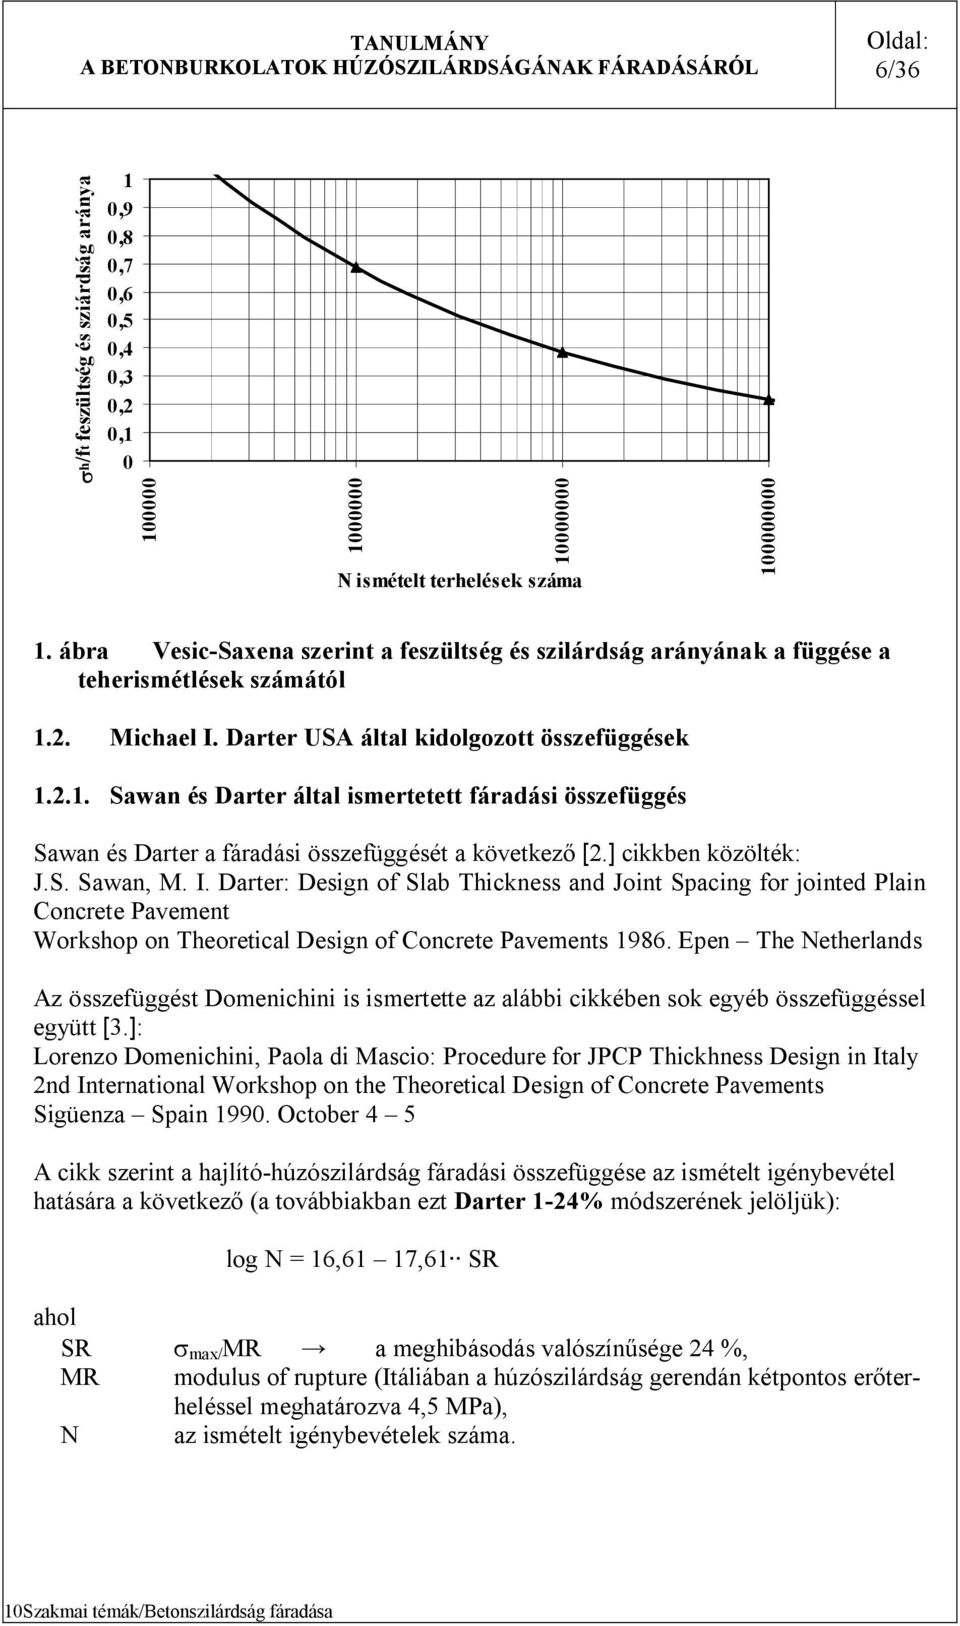 ] cikkben közölték: J.S. Sawan, M. I. Darter: Deign of Slab Thickne and Joint Spacing for jointed Plain Concrete Pavement Workhop on Theoretical Deign of Concrete Pavement 986.